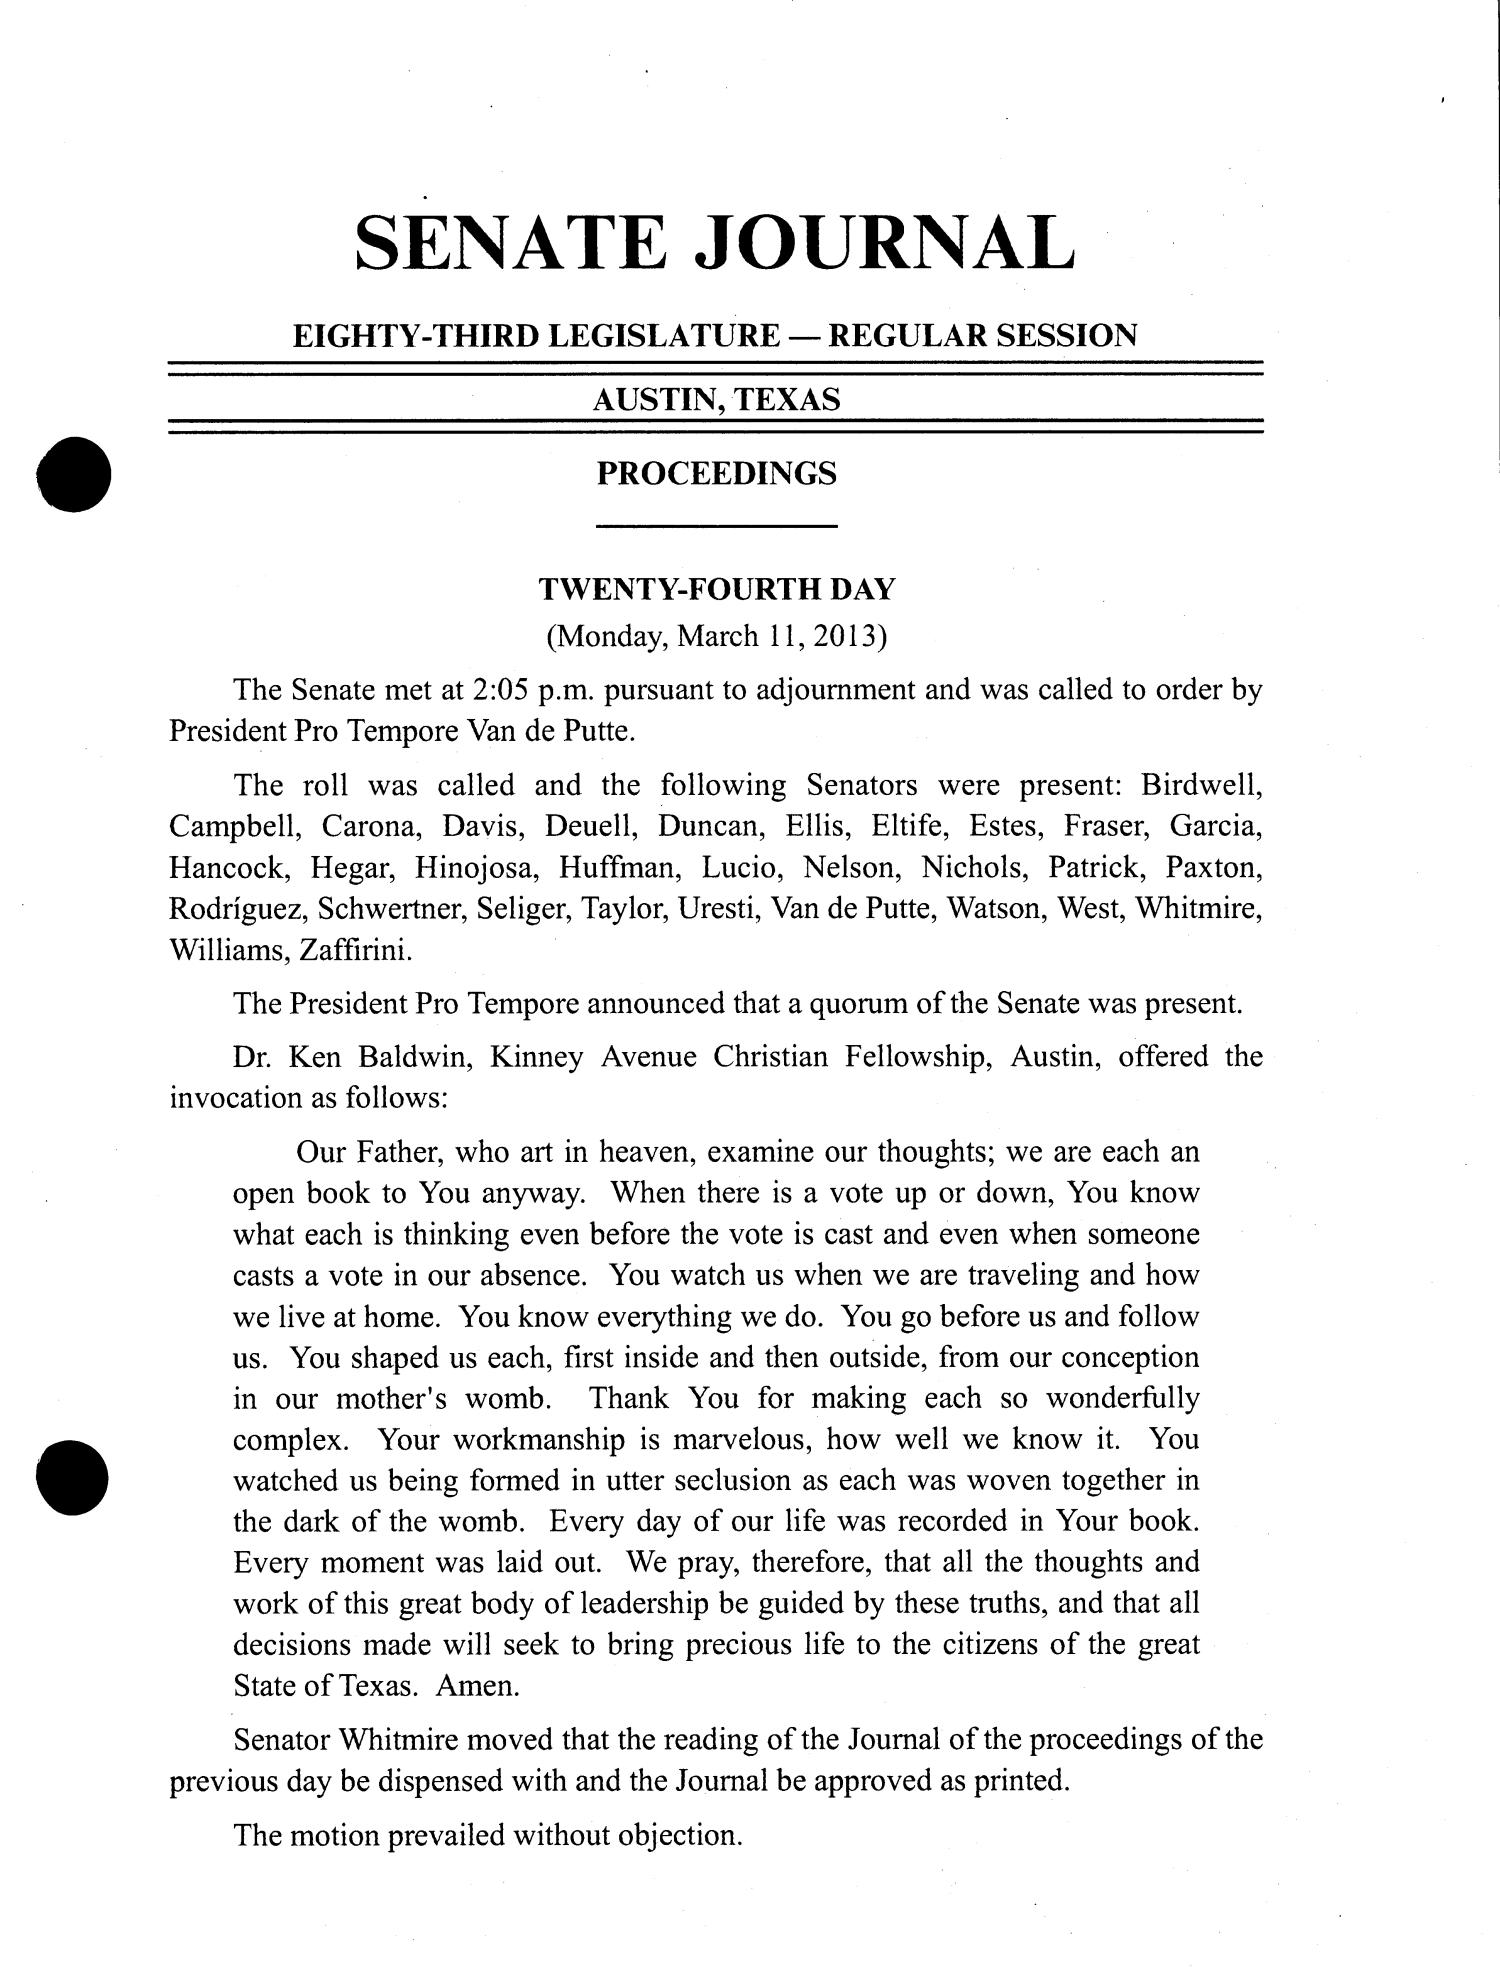 Journal of the Senate of Texas: 83rd Legislature, Regular Session, Monday, March 11, 2013
                                                
                                                    389
                                                